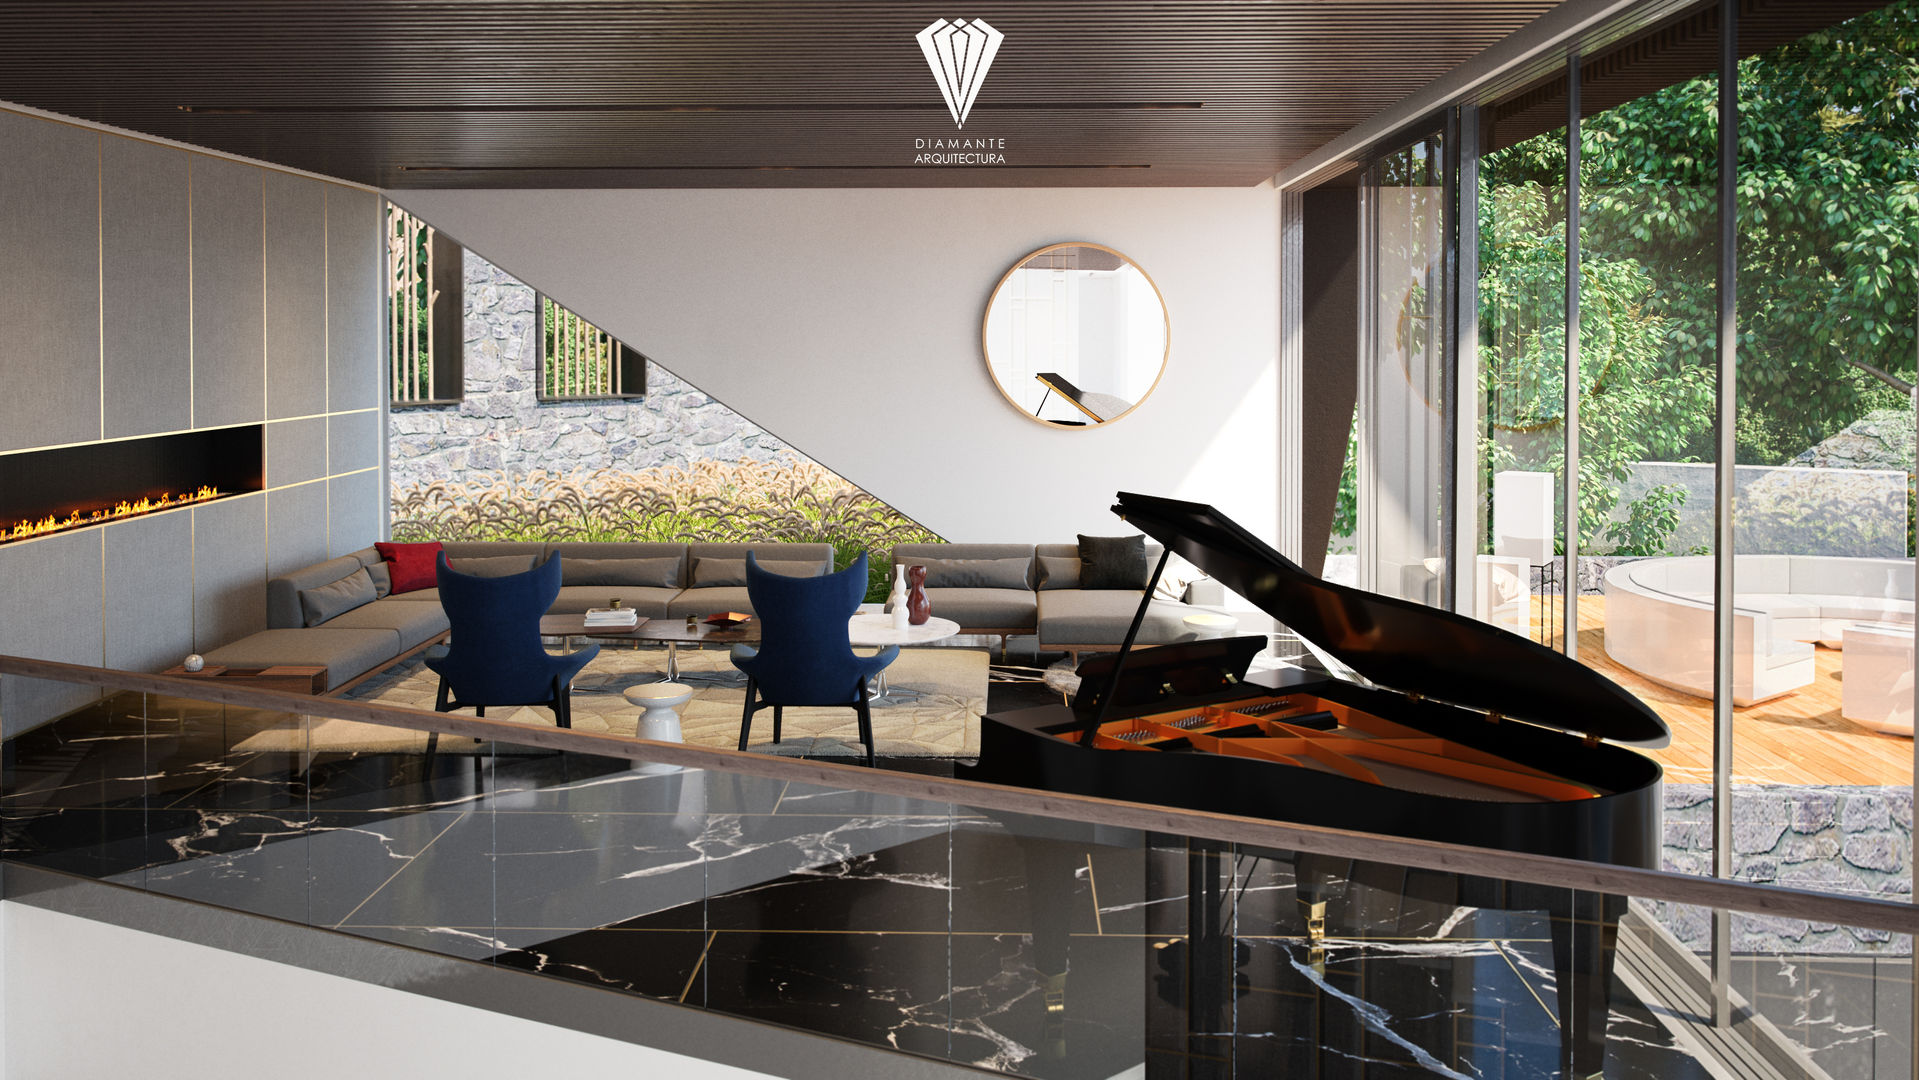 Sala de estar Diamante Arquitectura Salones modernos sala,moderno,estilo,contemporaneo,newluxuy